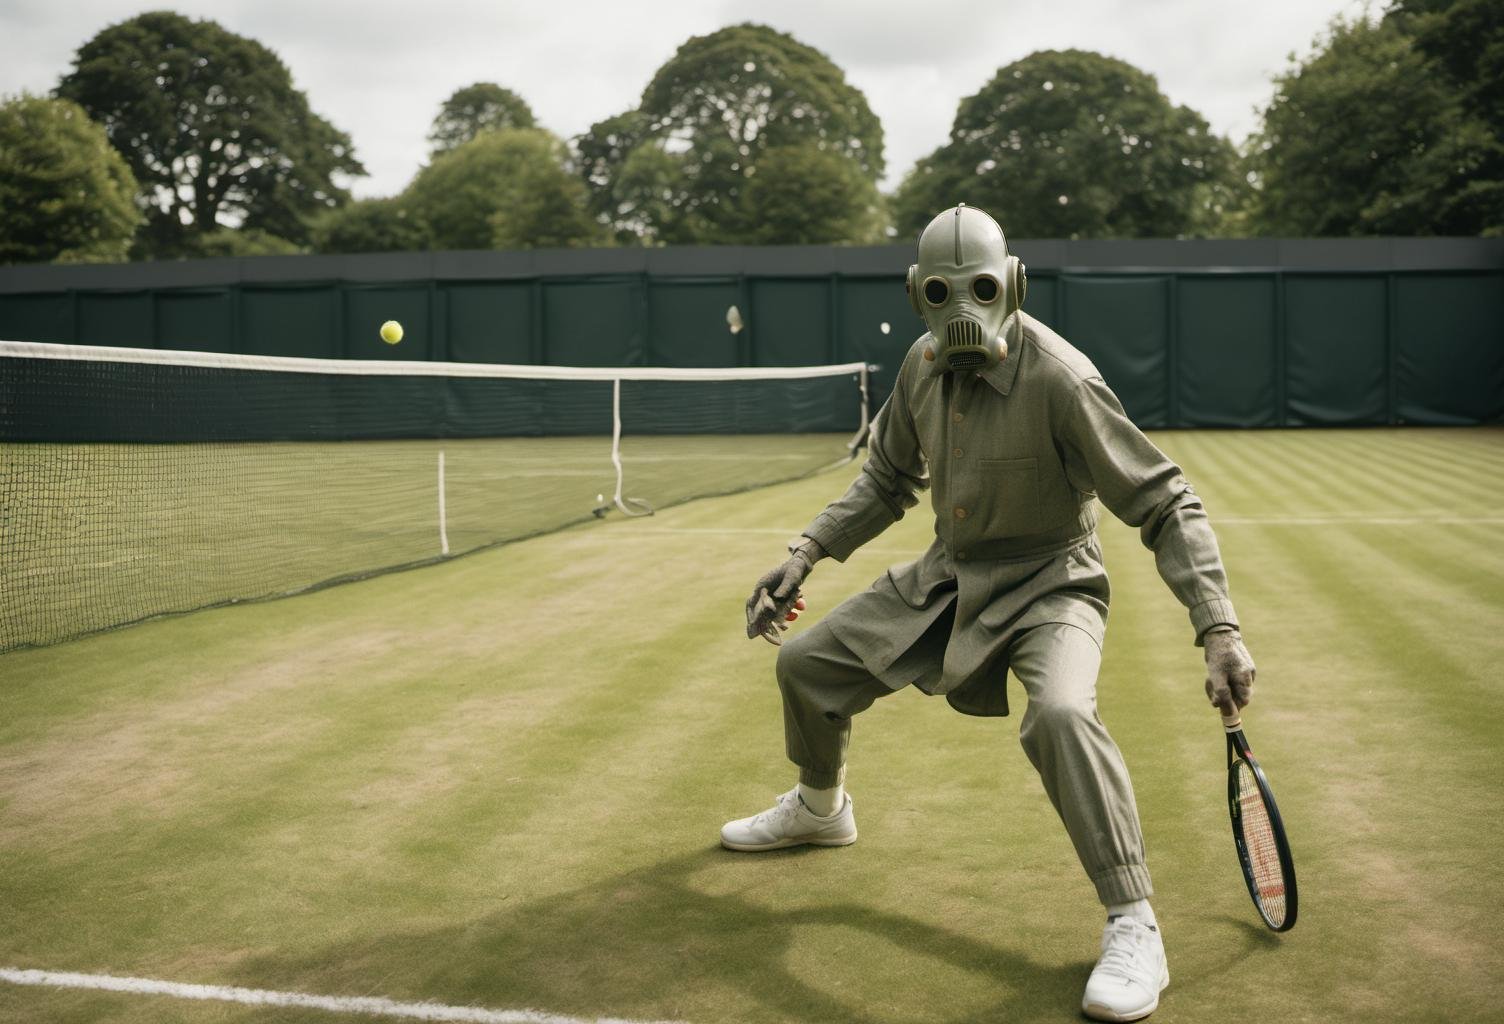 <lora:SDXL Grab-Bag-2 - Gasmask Guys - Trigger is grbtw artstyle:1> Playing tennis at Wimbledon, grbtw artstyle